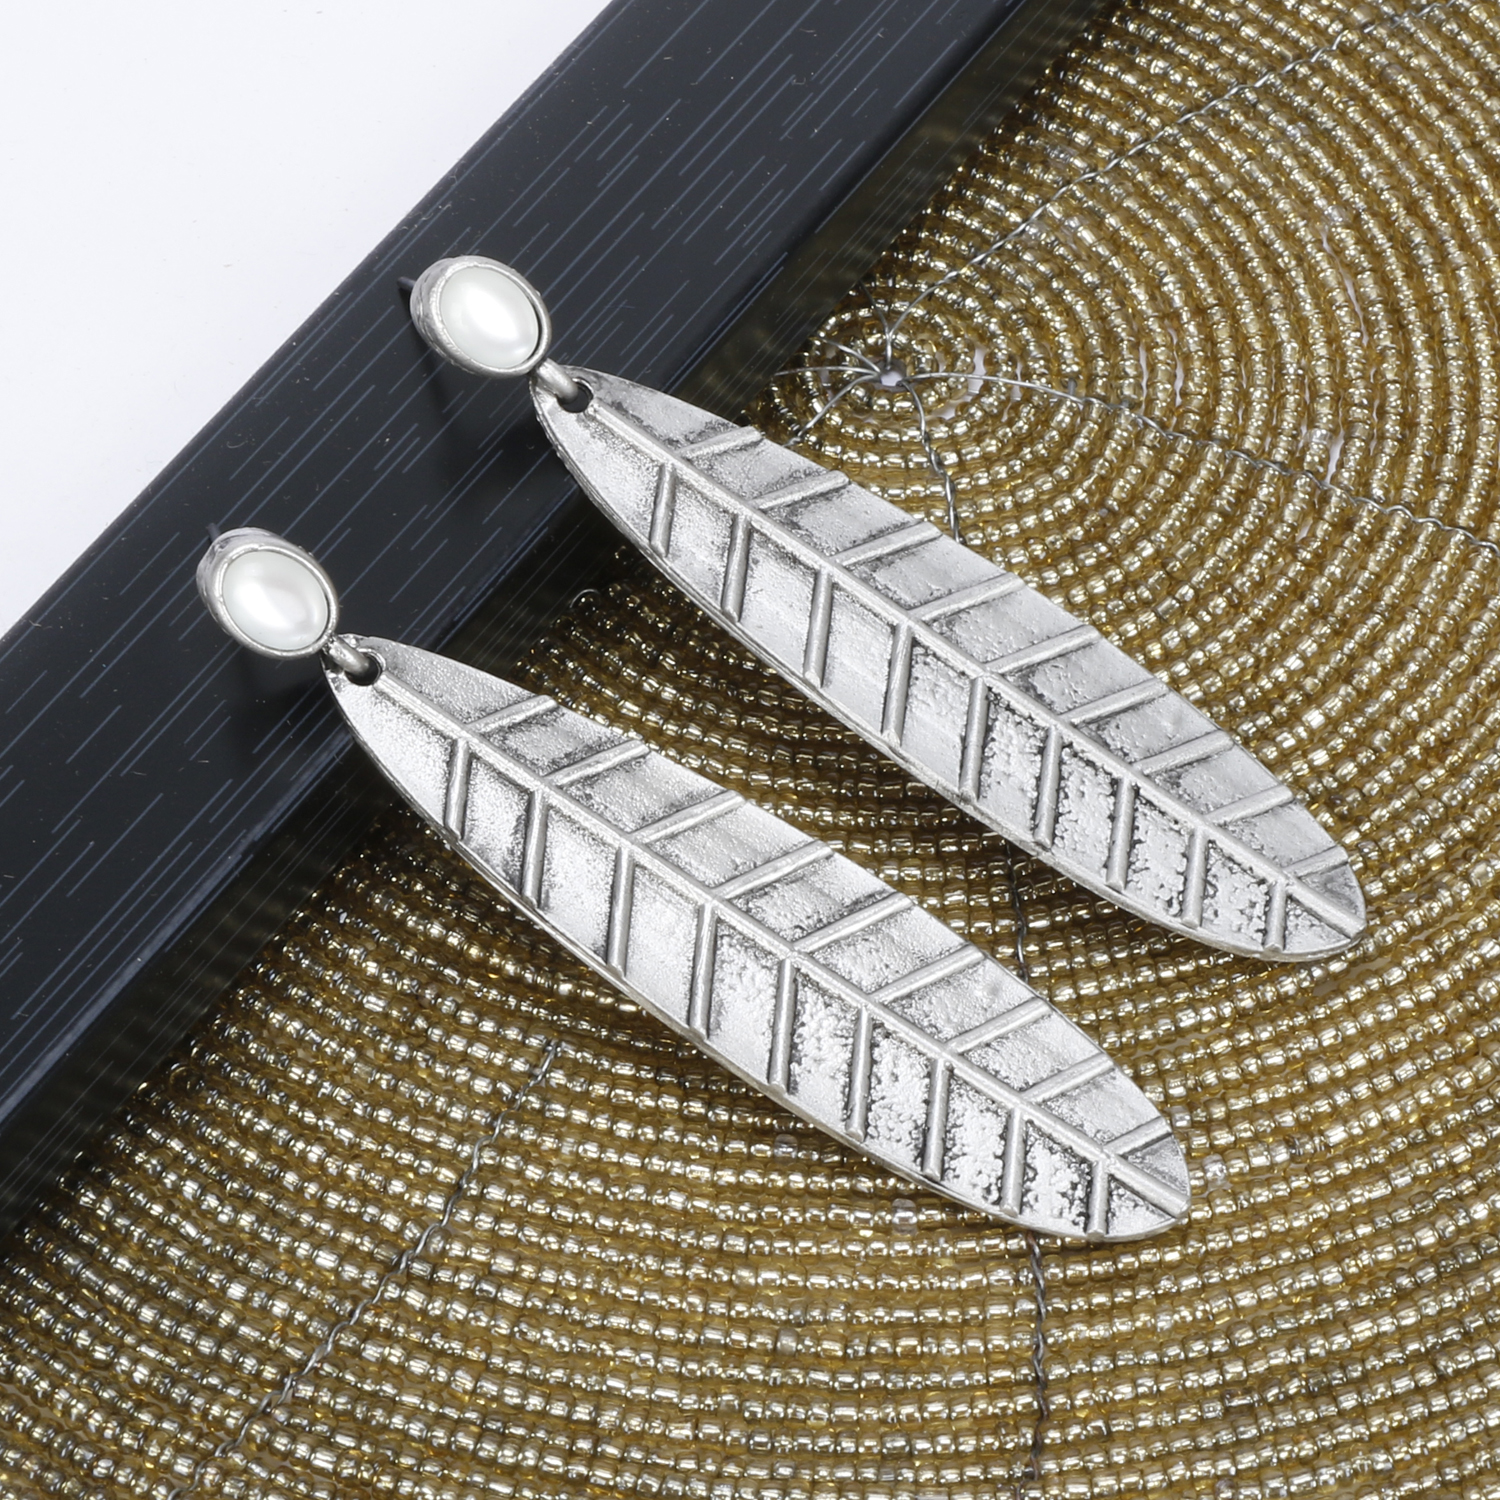 Oz Jewels Silver-Plated Oxidised Leaf Shaped Earrings